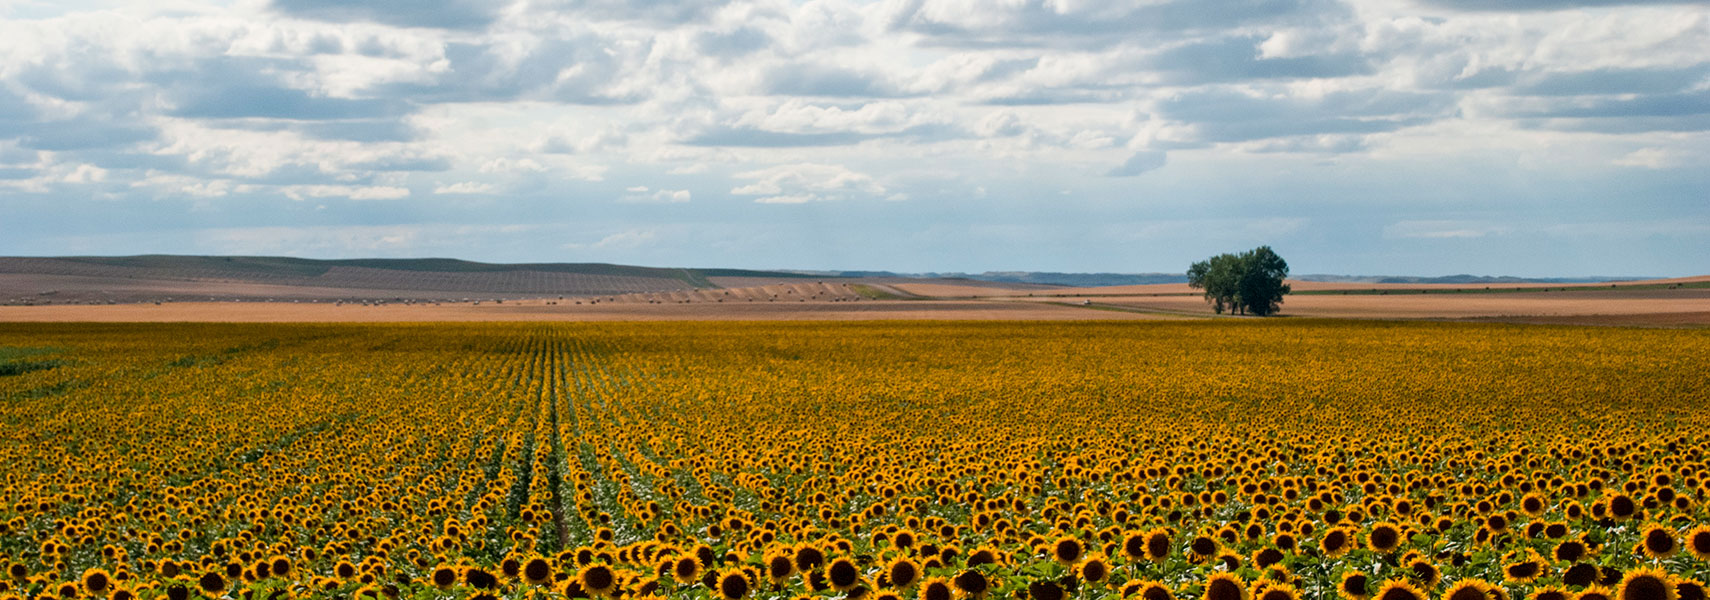 Sunflower field in North Dakota